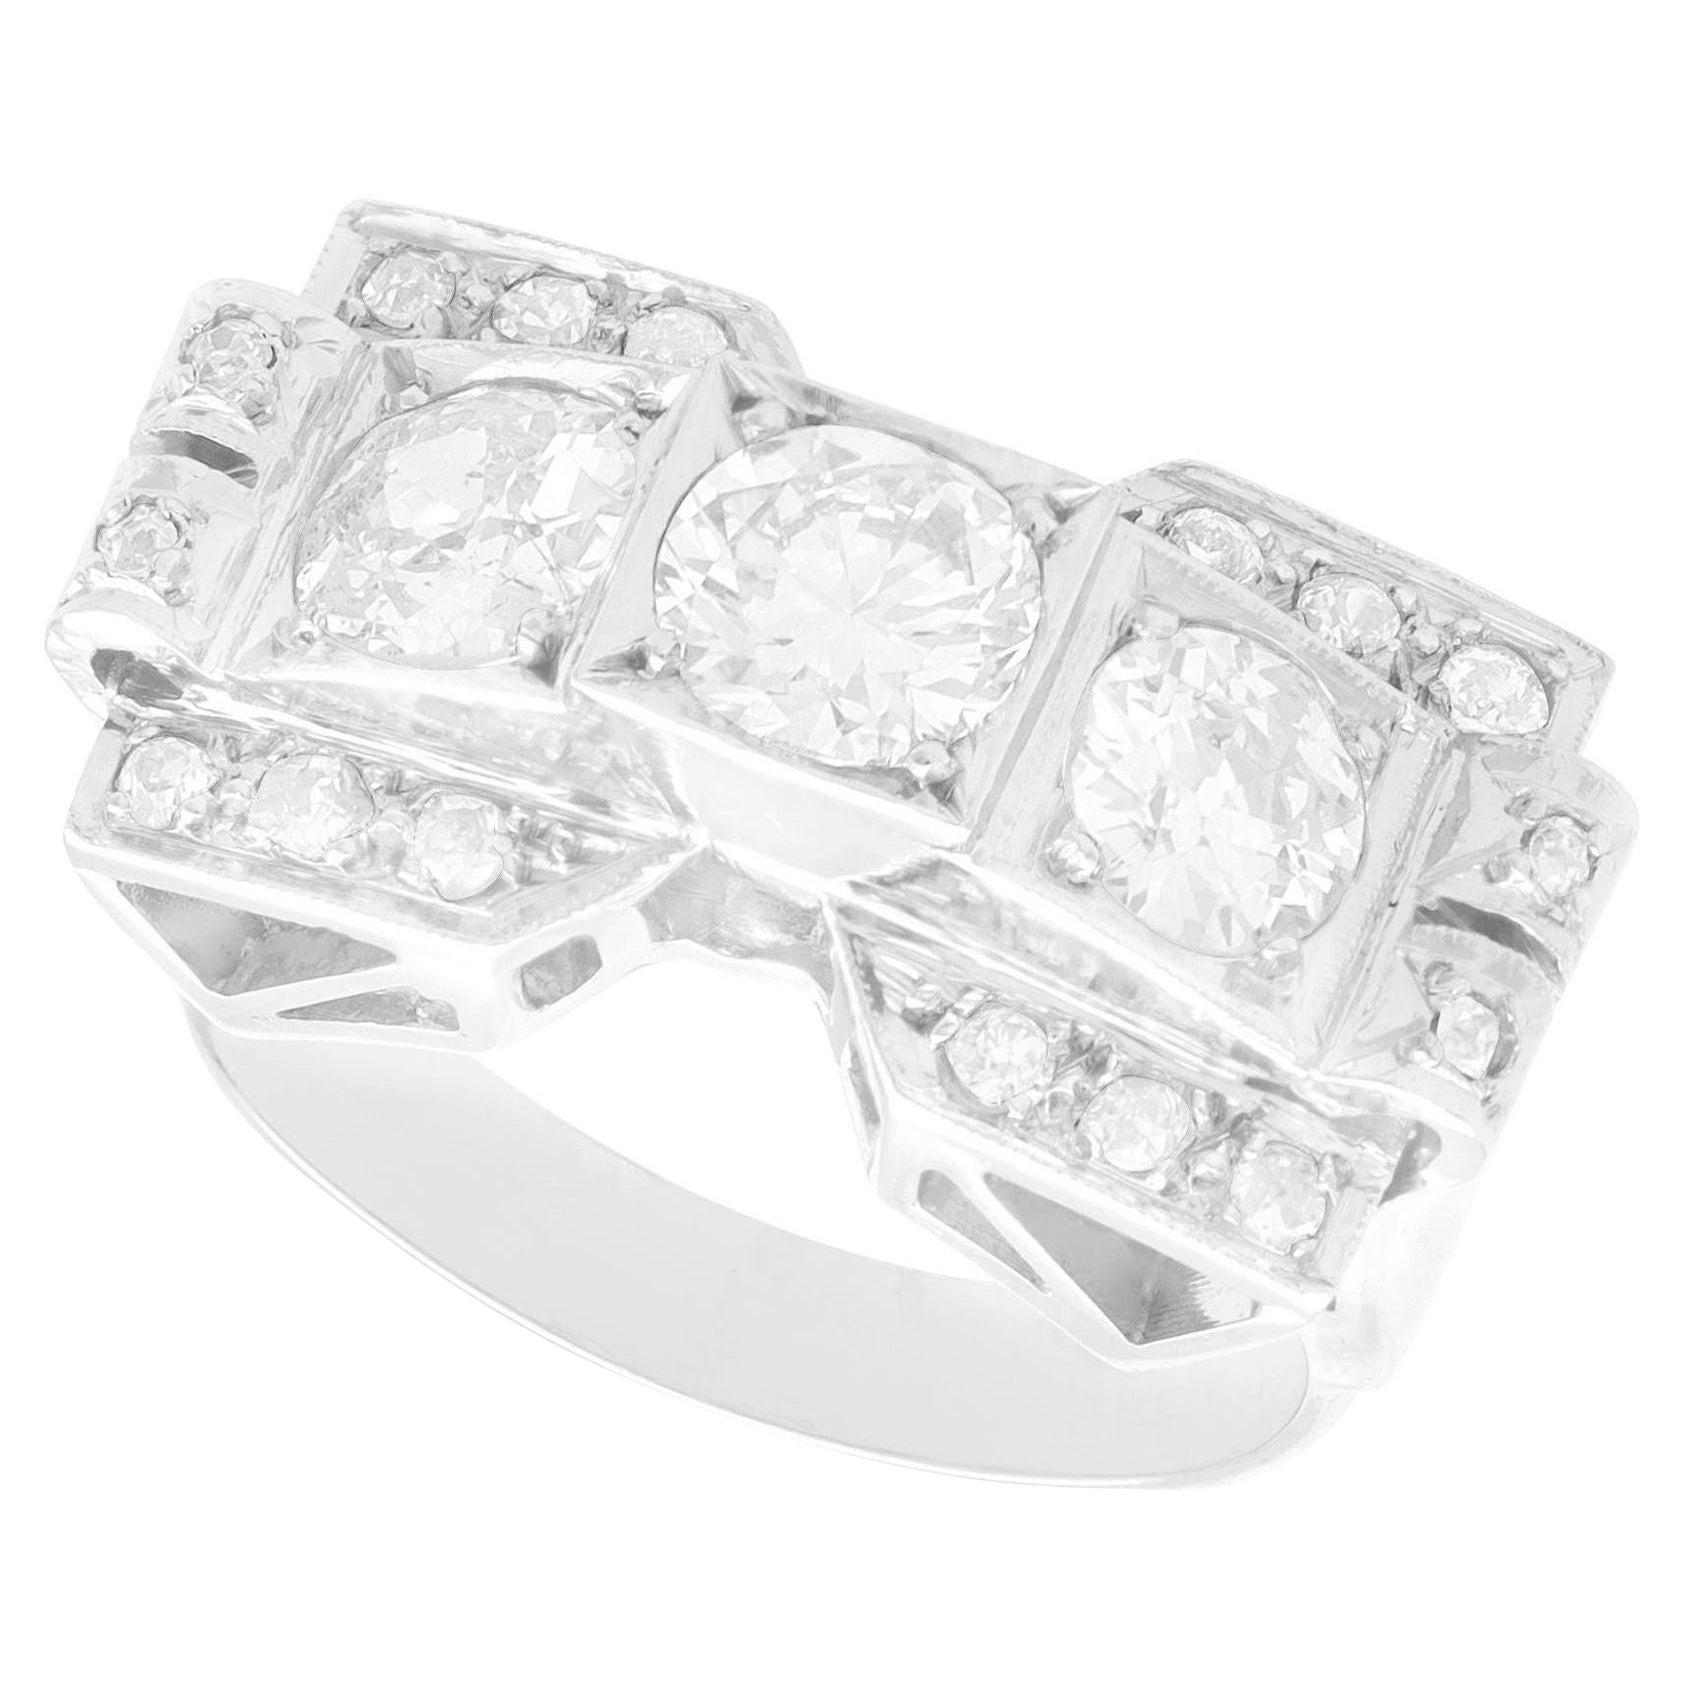 Antique Art Deco 2.18 Carat Diamond and White Gold Dress Ring